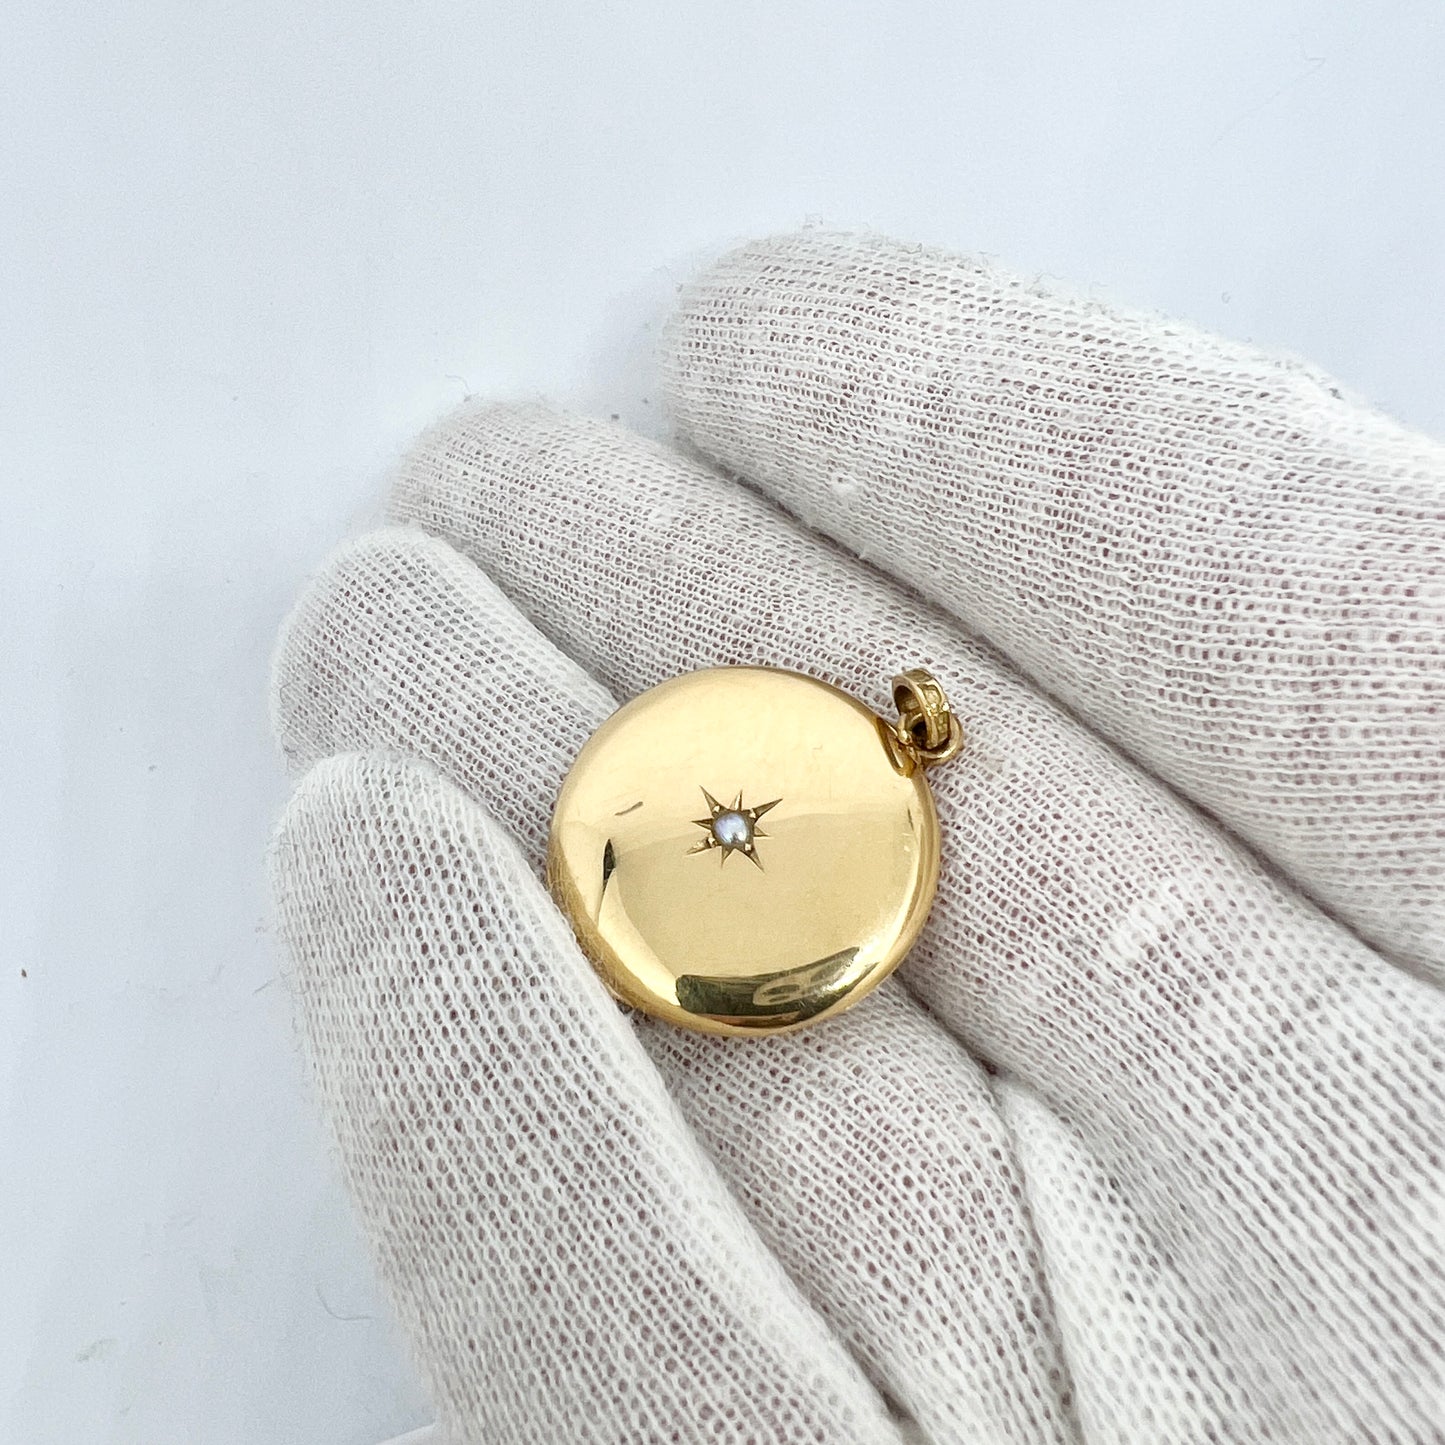 G Dahlgren, Sweden 1915. Antique 18k Gold Seed Pearl Locket Pendant.